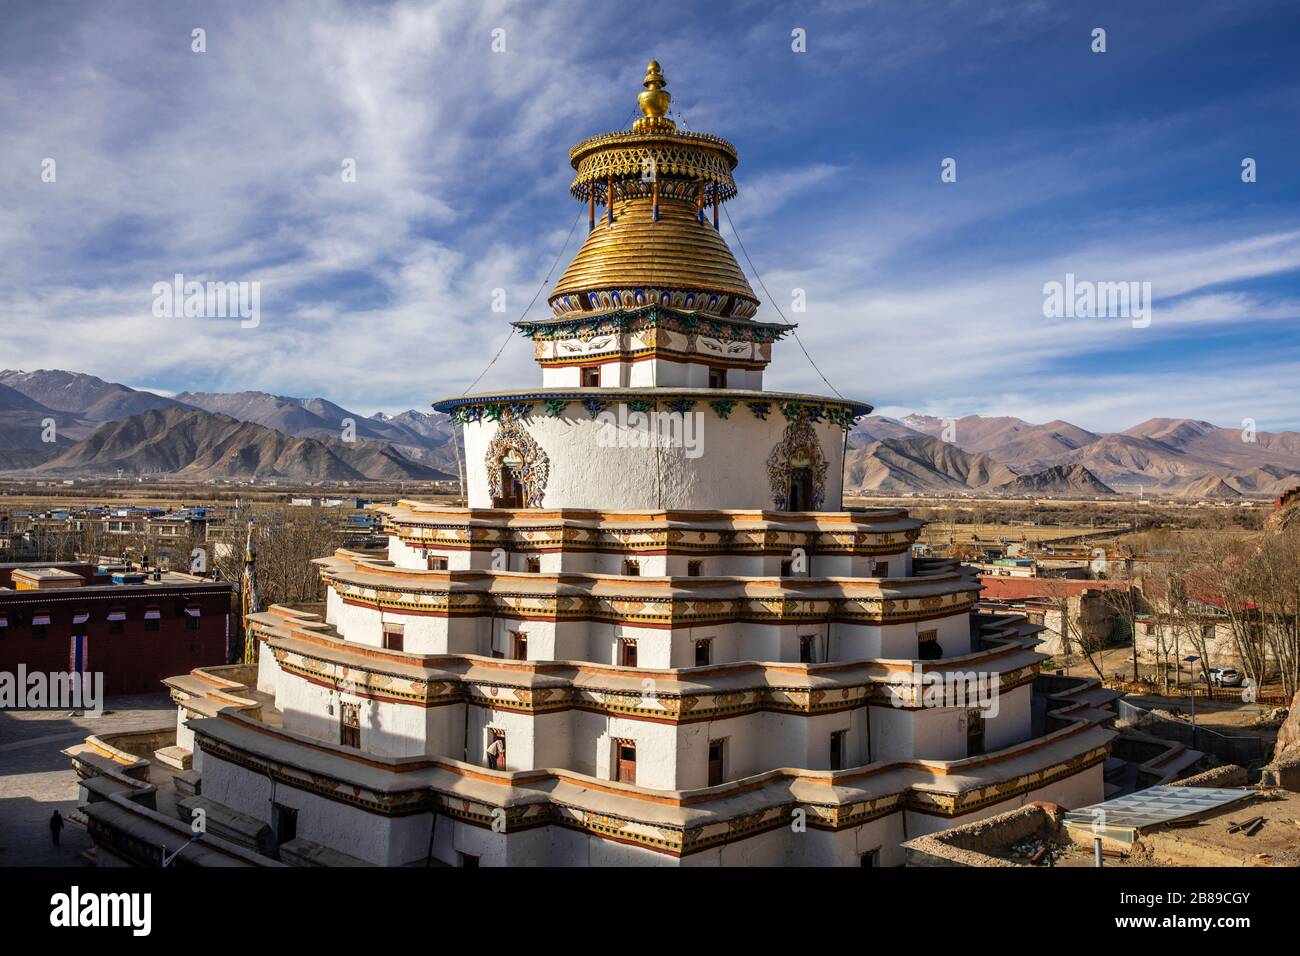 Centro piramide di Kum Bum Chorten a Gyangze, Tibet Foto Stock